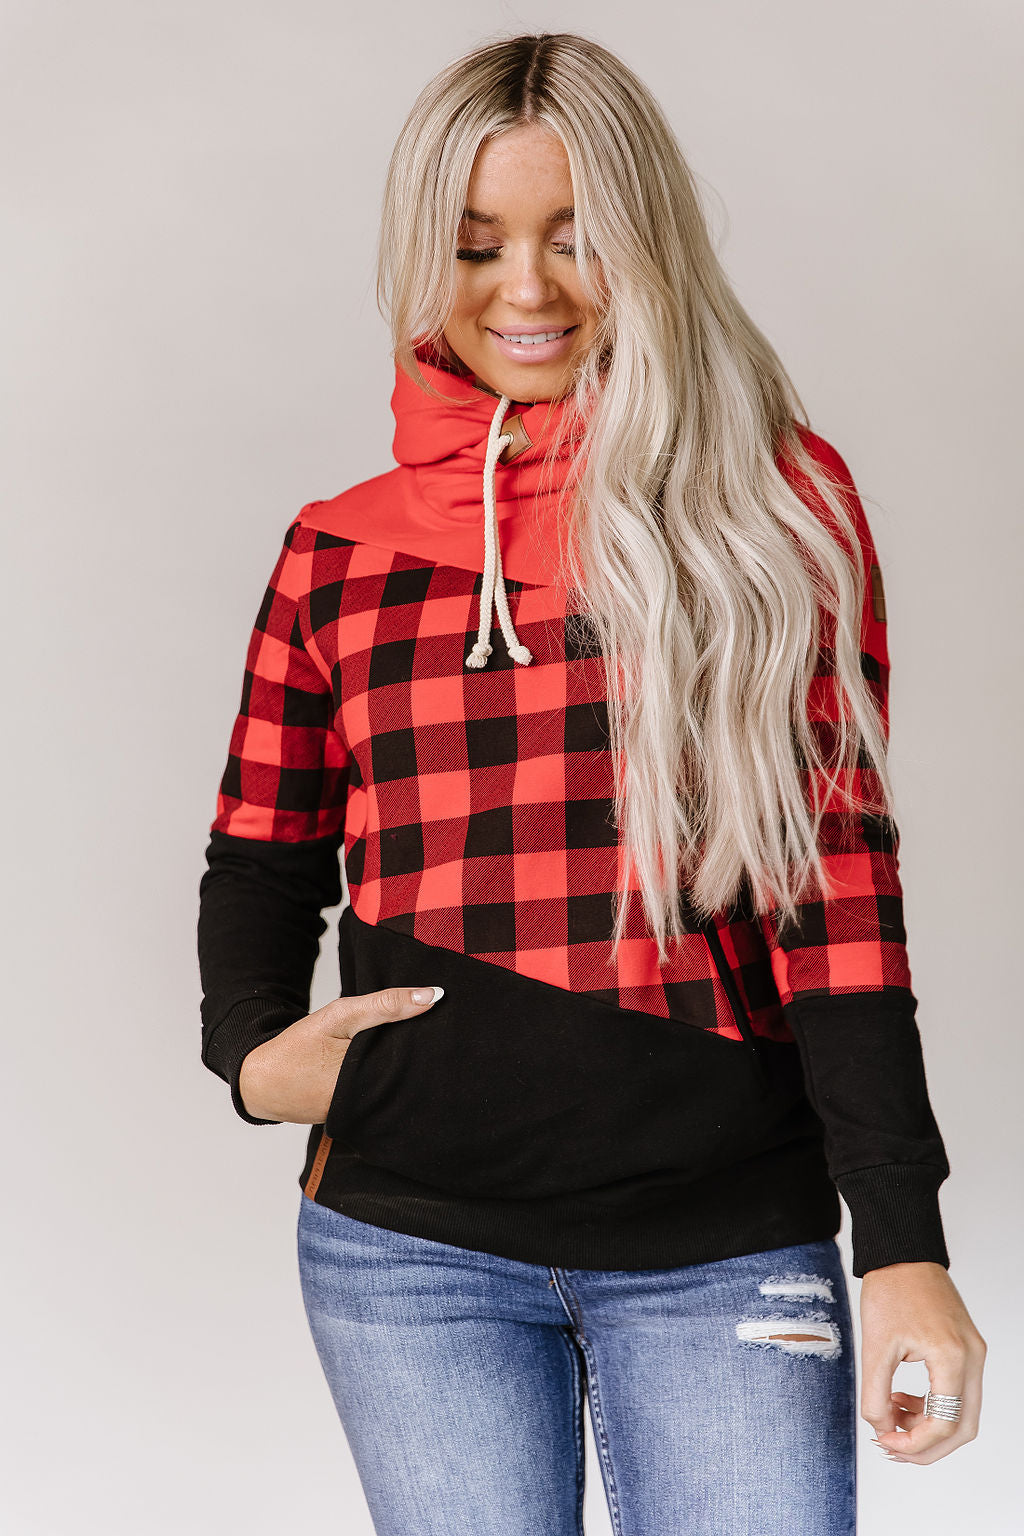 Singlehood Sweatshirt - Under the Mistletoe - Mindy Mae's Marketcomfy cute hoodies